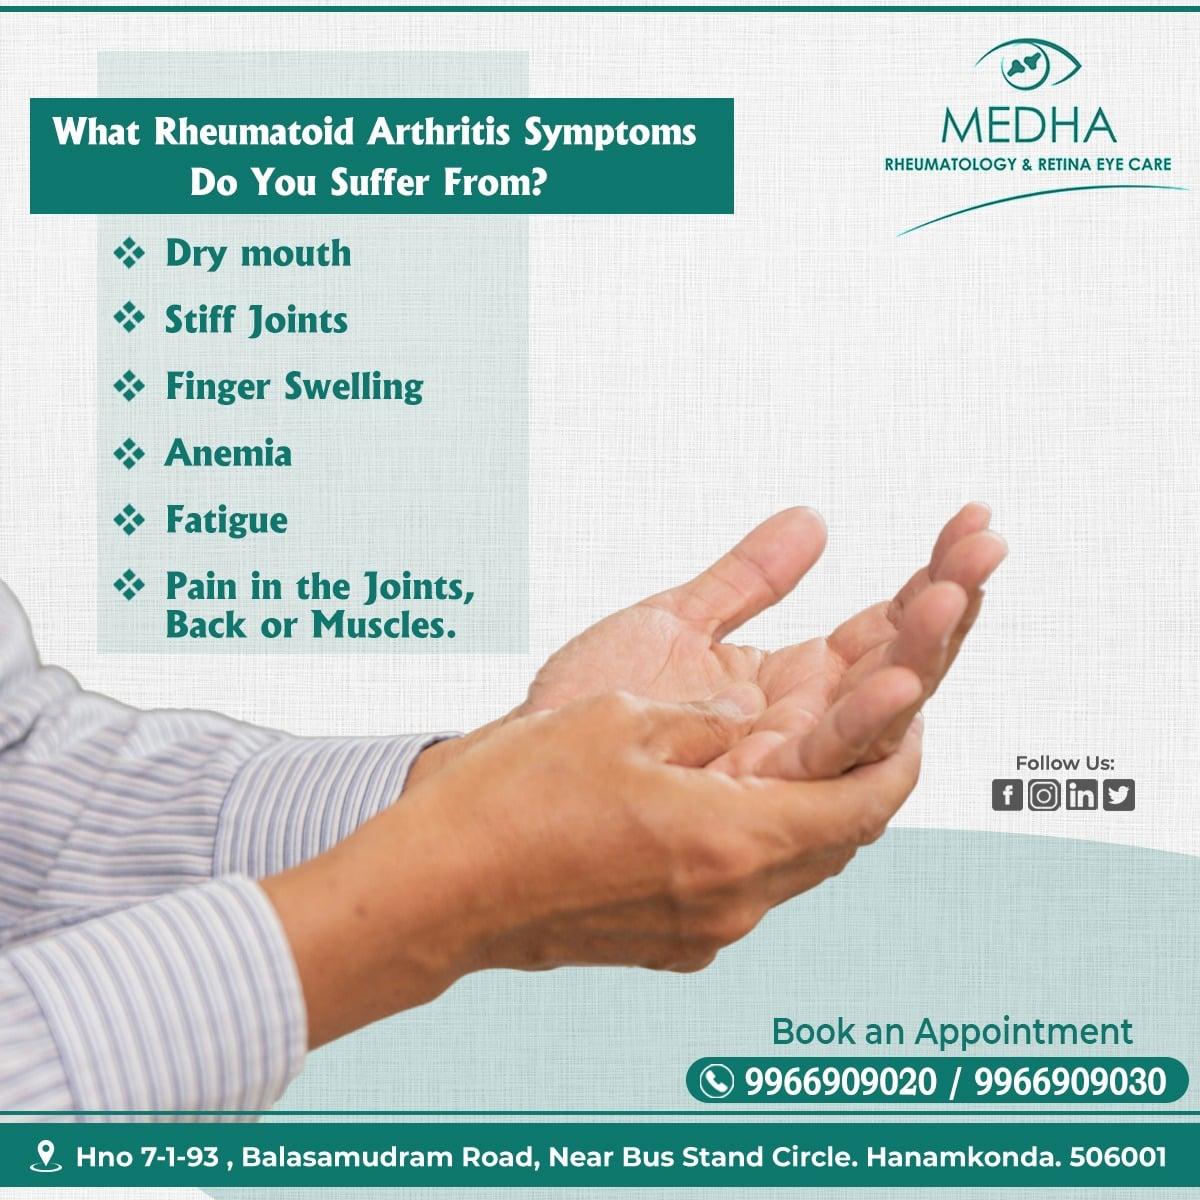 Signs and symptoms of Rheumatoid Arthritis